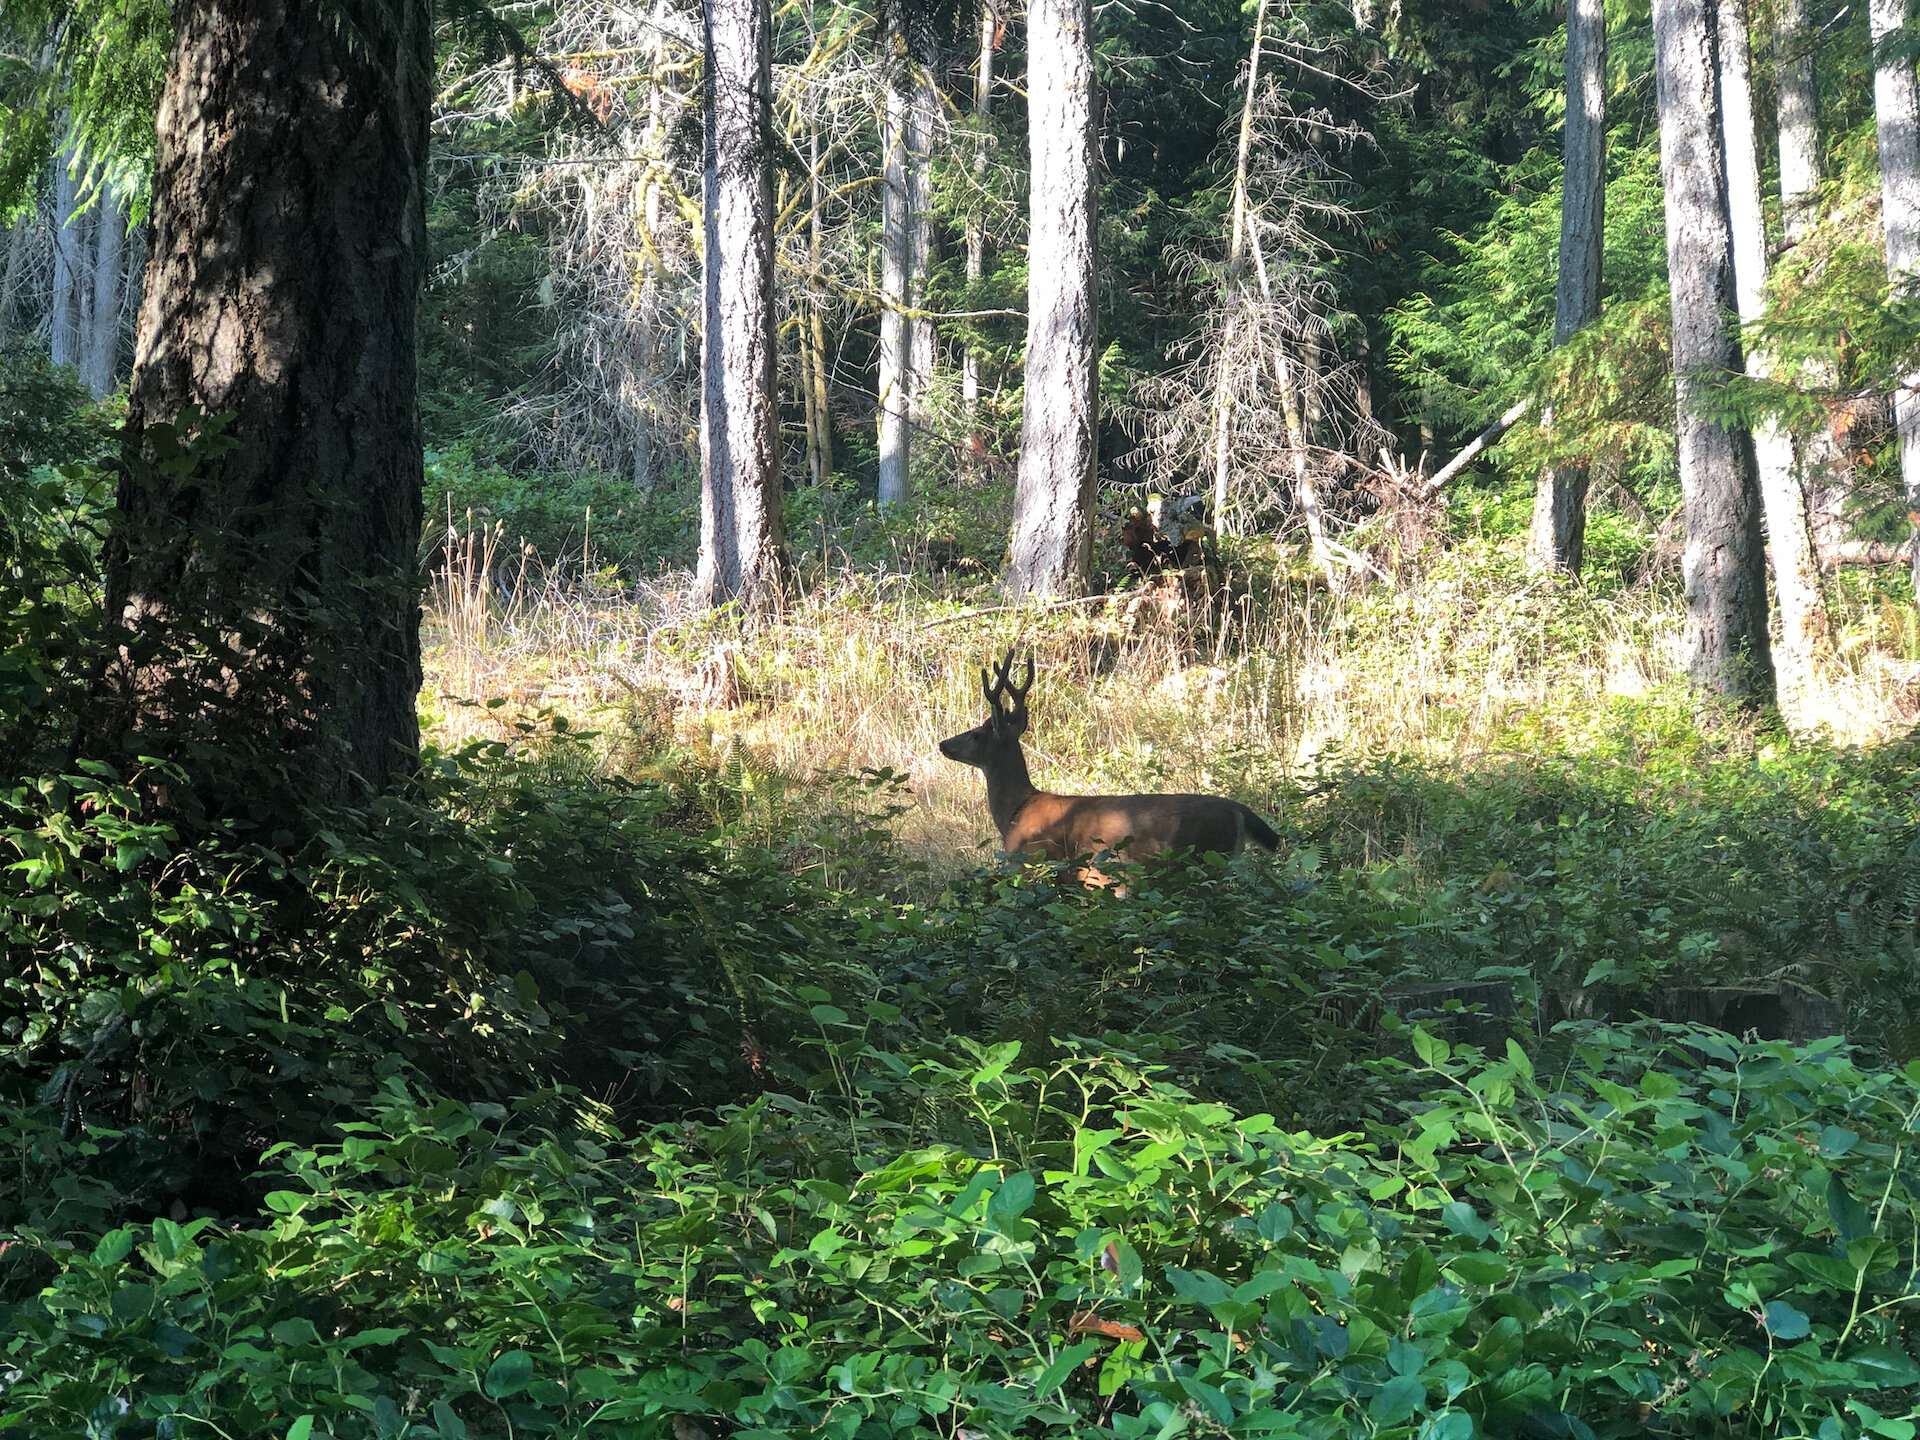 Early August - Deer (mageddon)